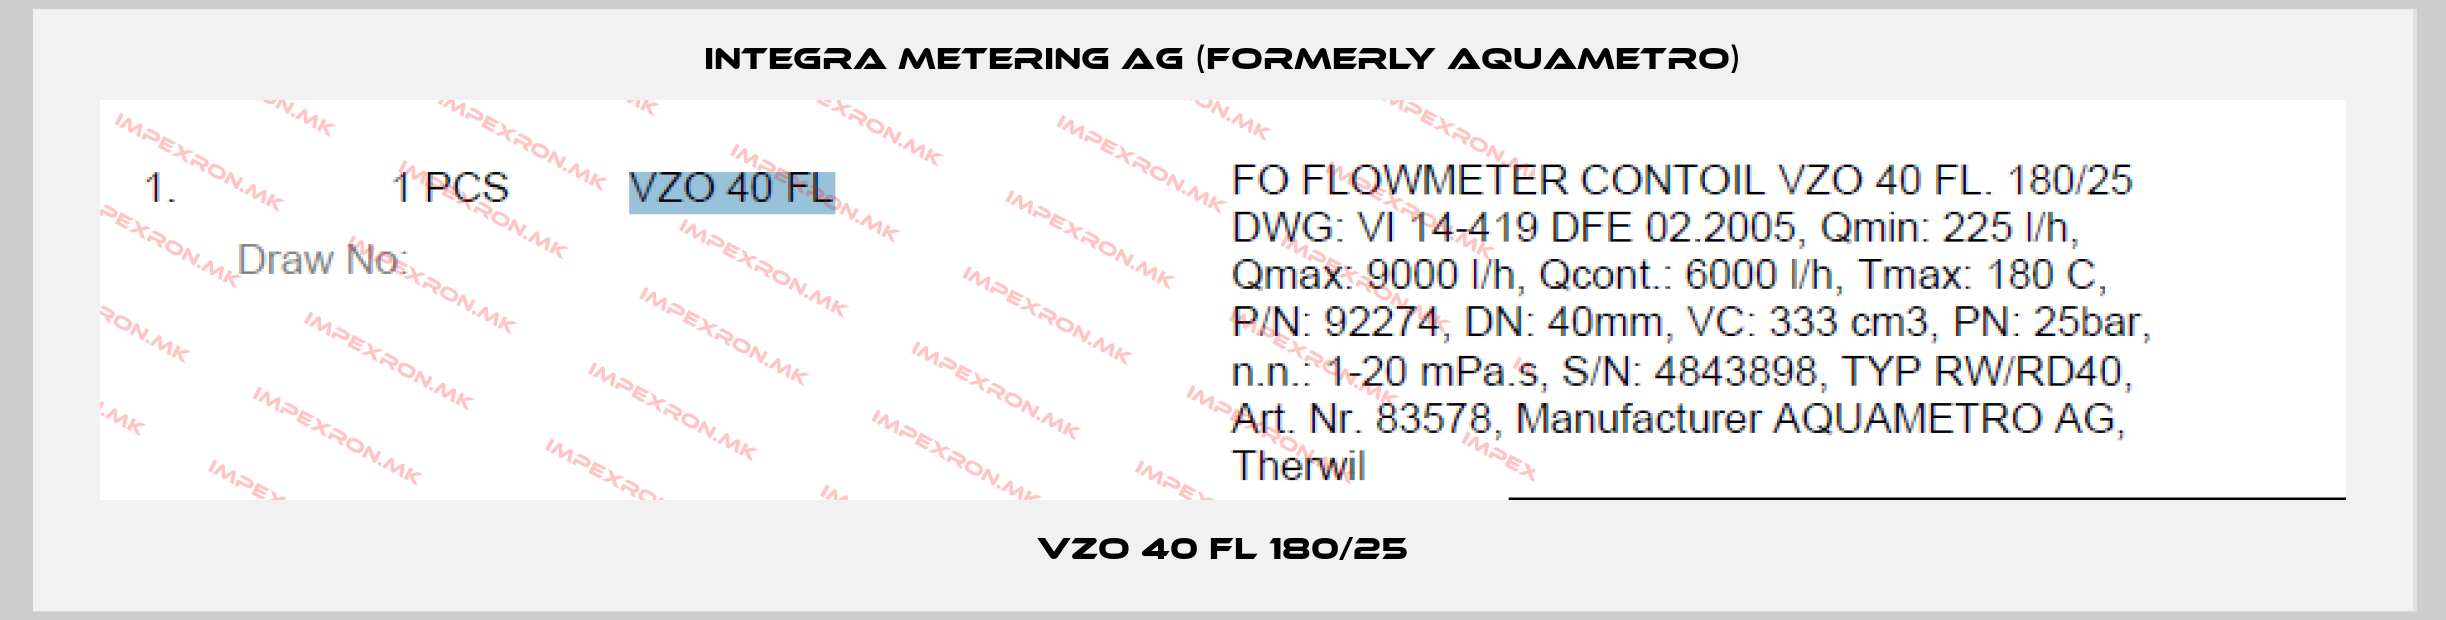 Integra Metering AG (formerly Aquametro)-VZO 40 FL 180/25price